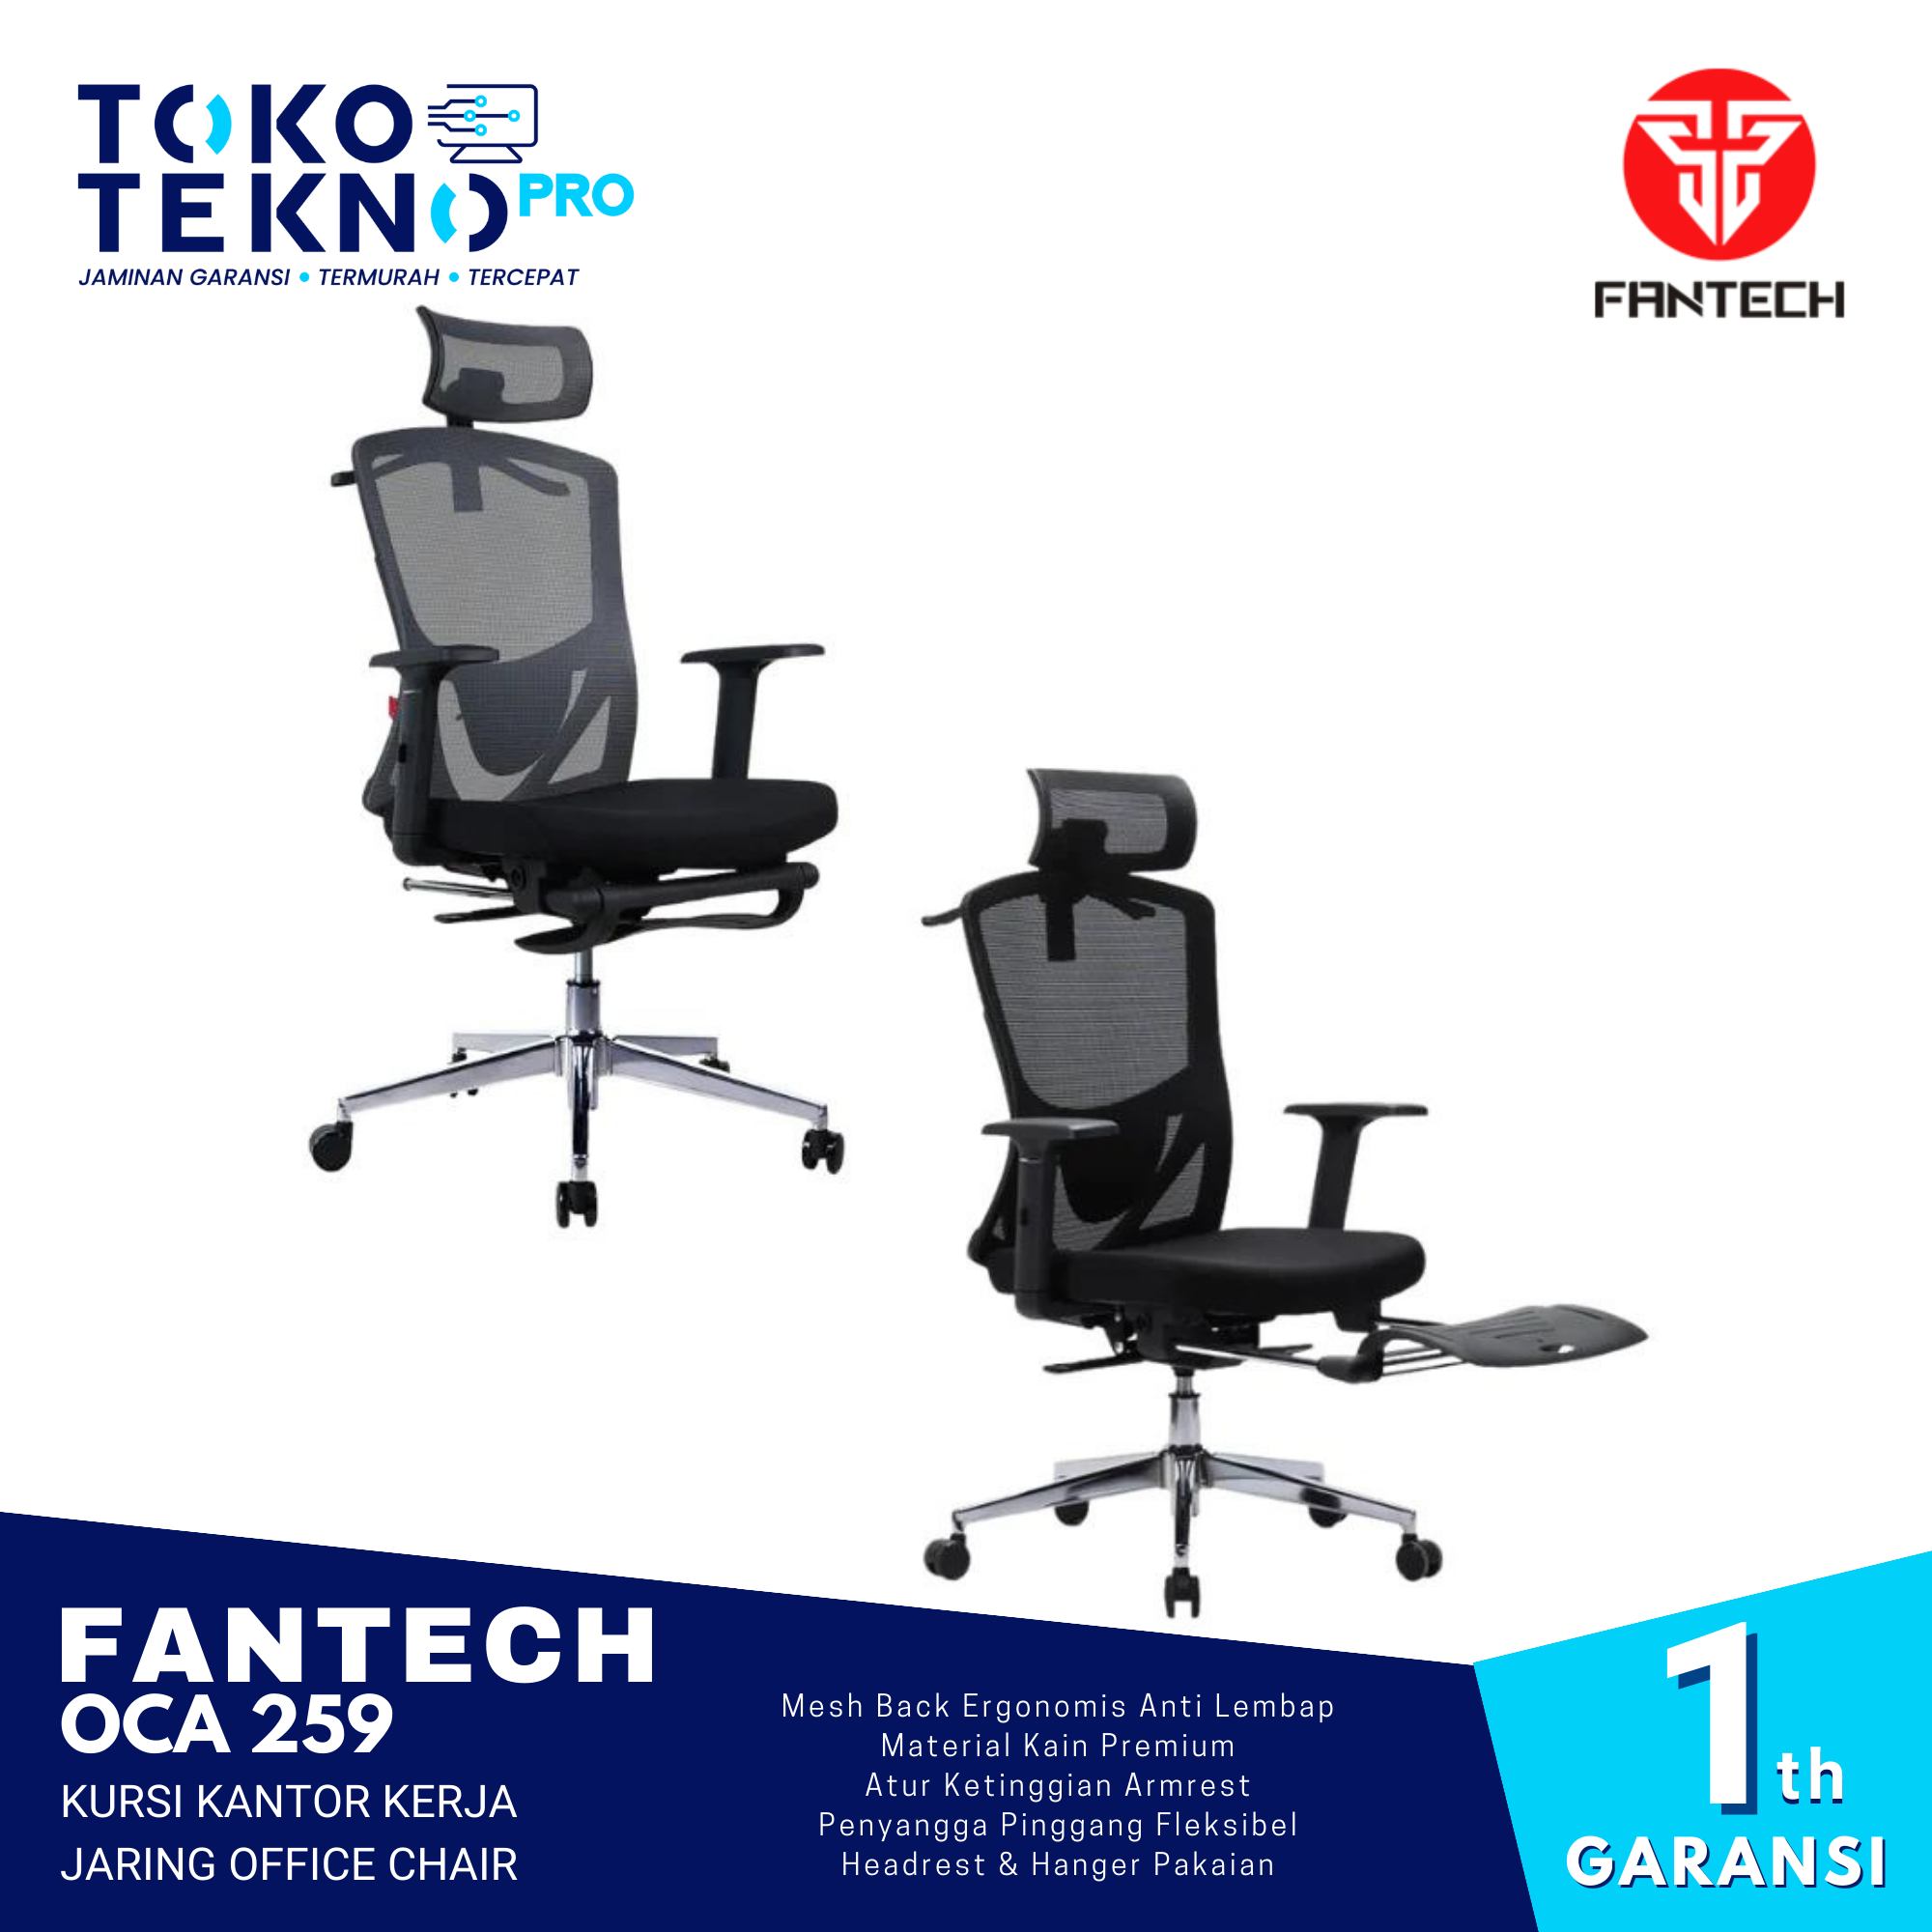 Fantech OCA259 Kursi Kantor Kerja Jaring Office Chair